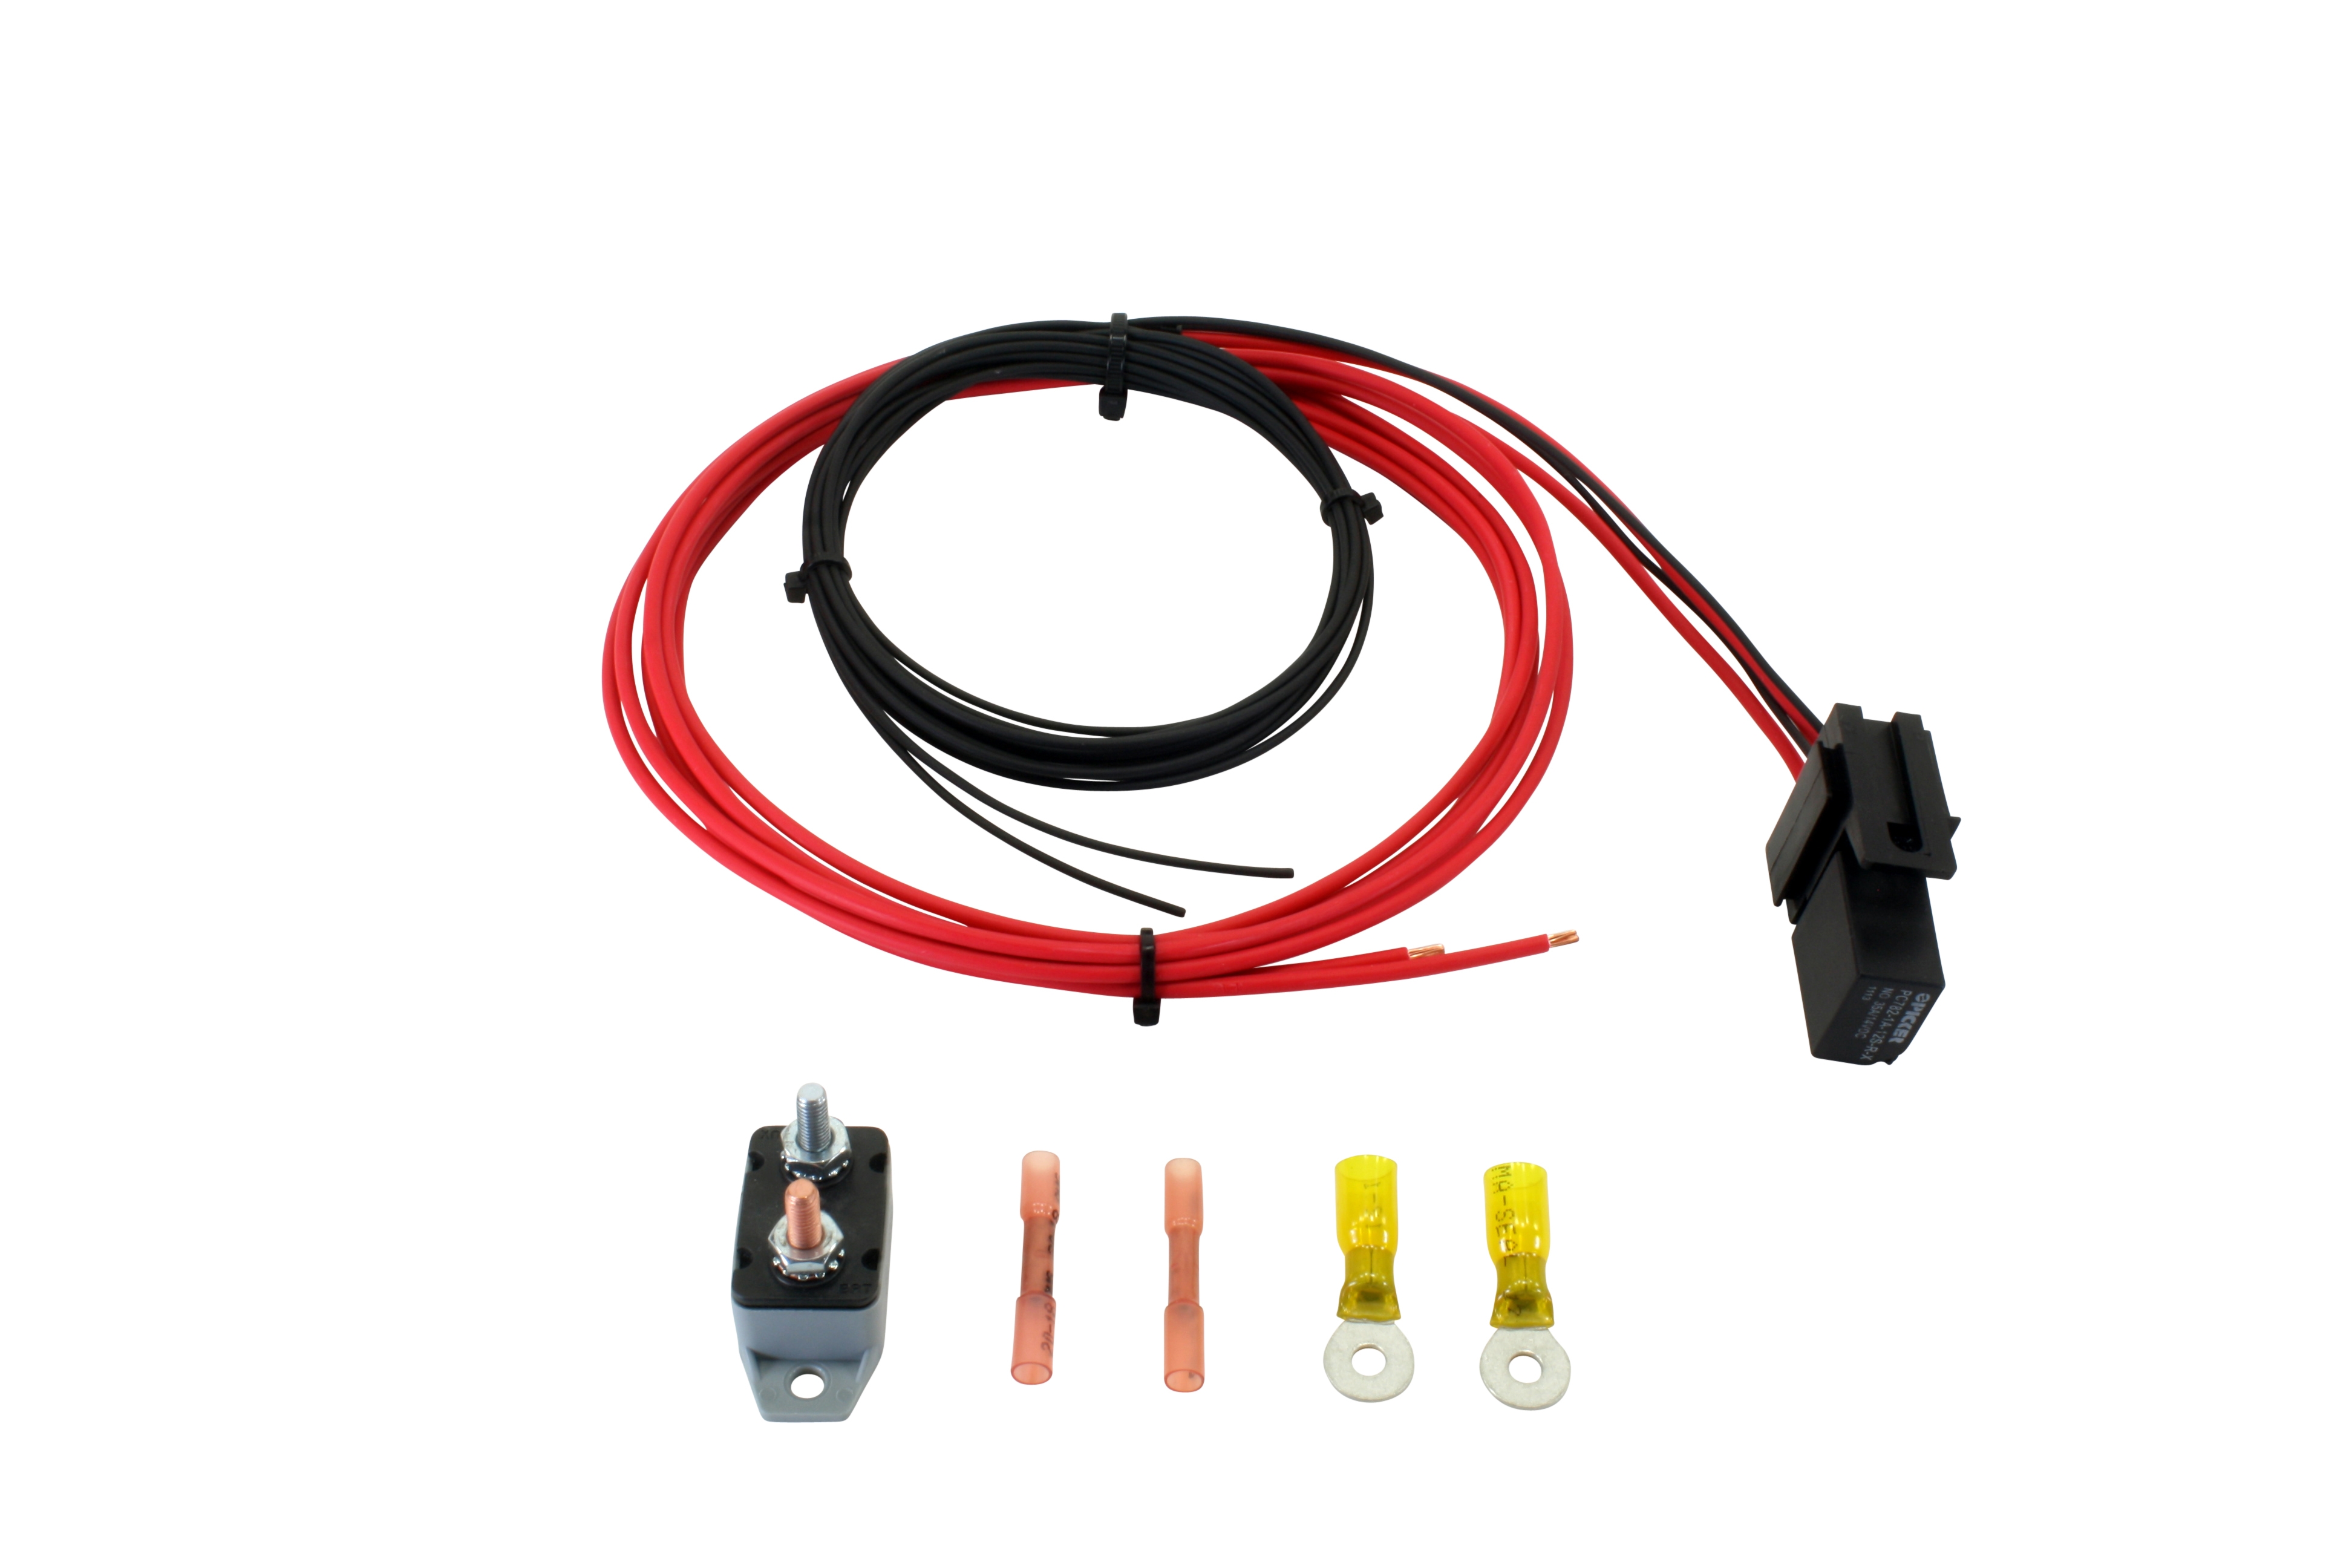 AEM 30 Amp Relay Wiring Kit. Includes 30 Amp Circuit Breaker(Auto reset, splash and dustproof), 30 Amp Relay, 80" 10 gauge Mini-Harness, Terminals & Connectors